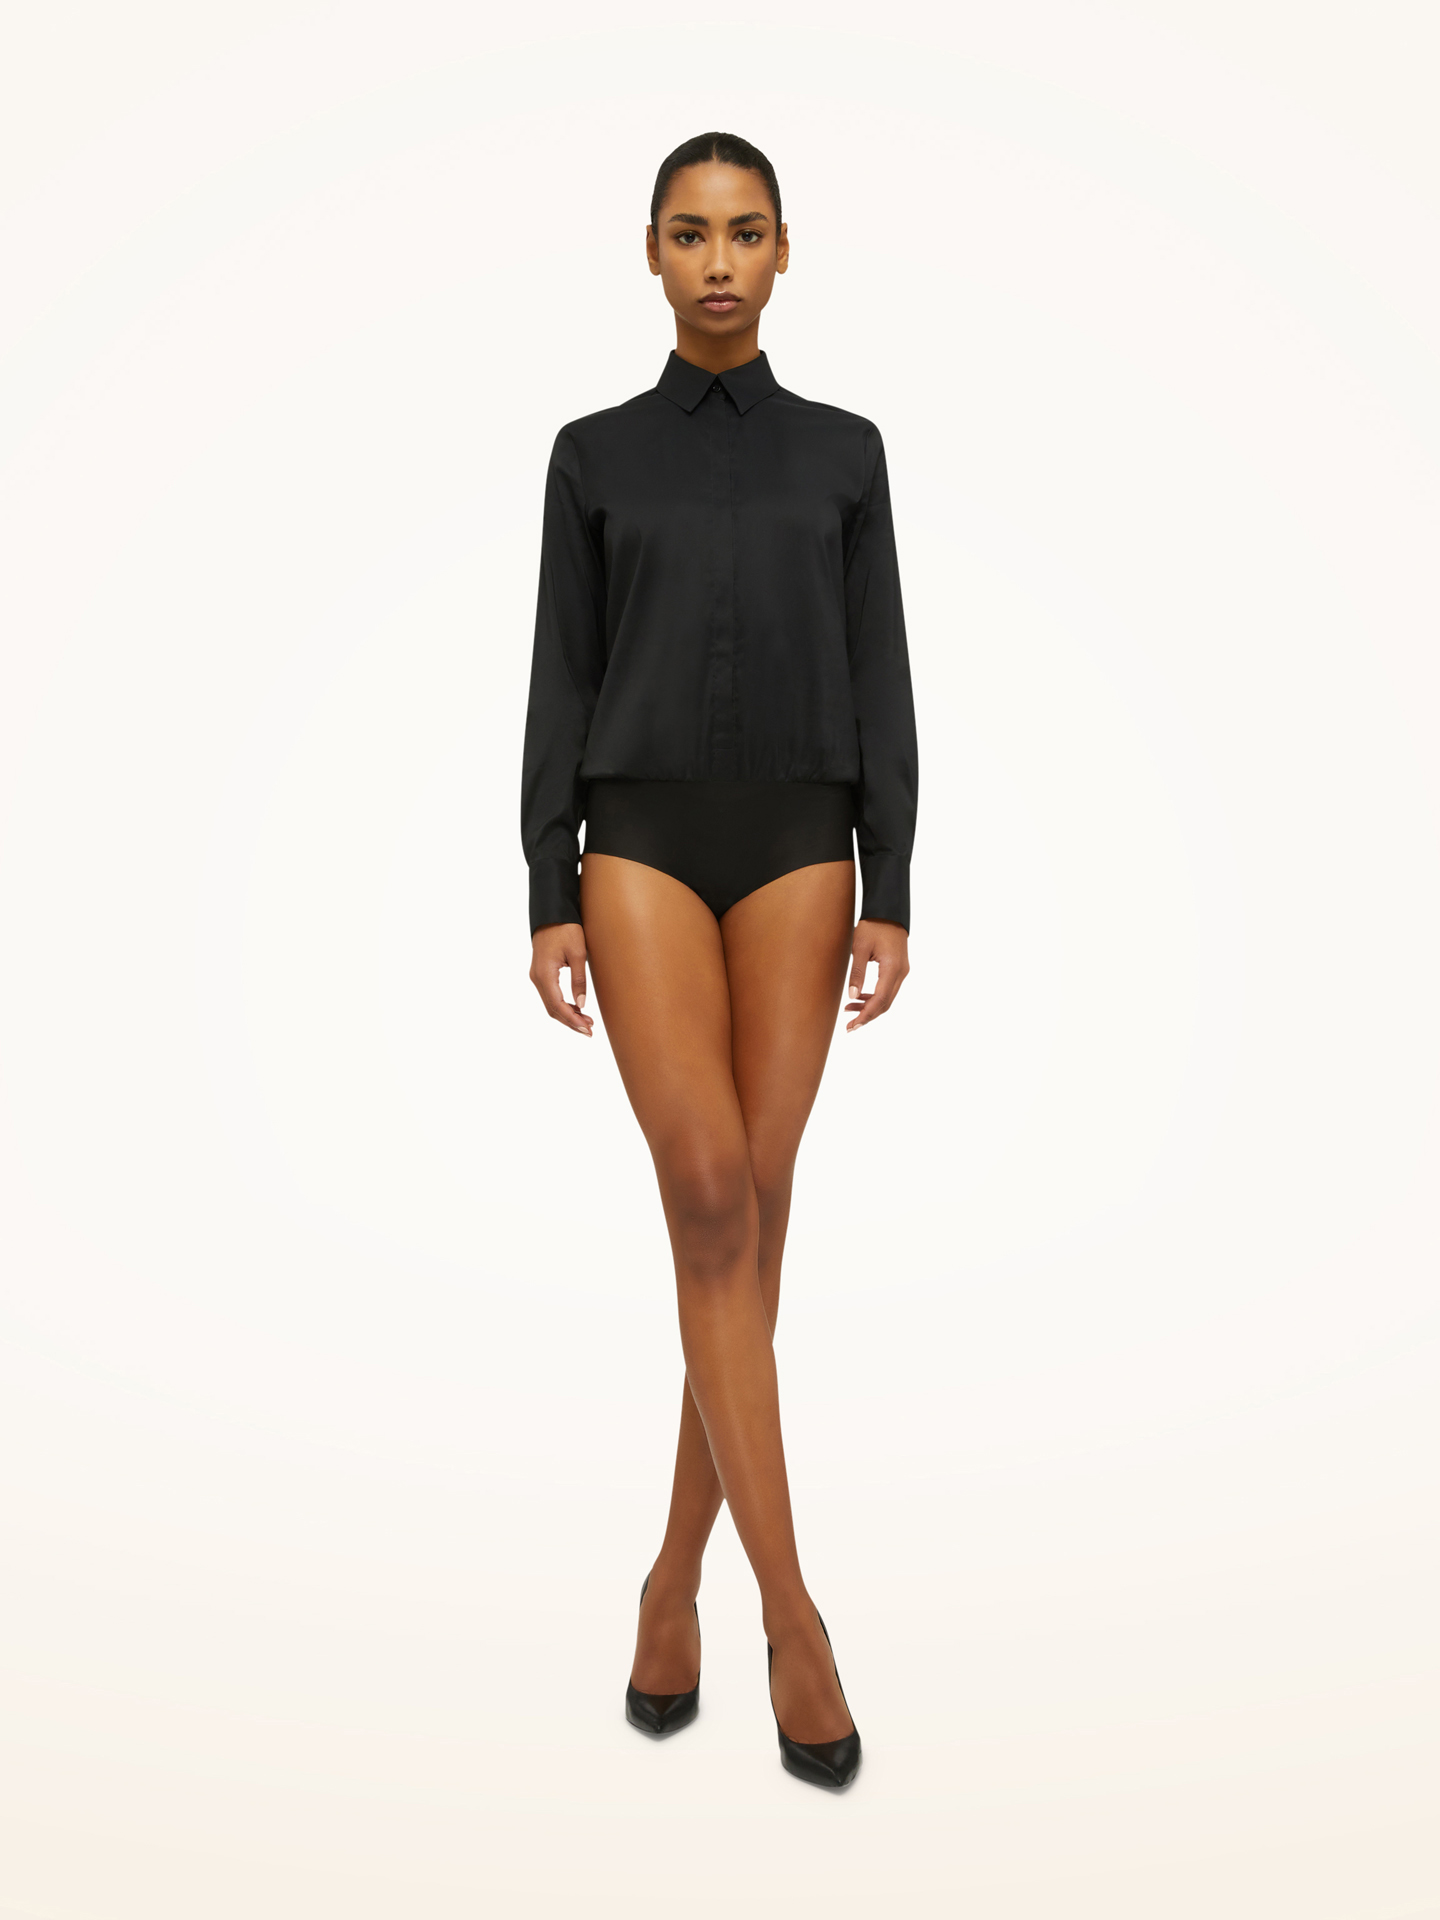 Wolford – London Effect Panty Body, Frau, black, Größe: 38